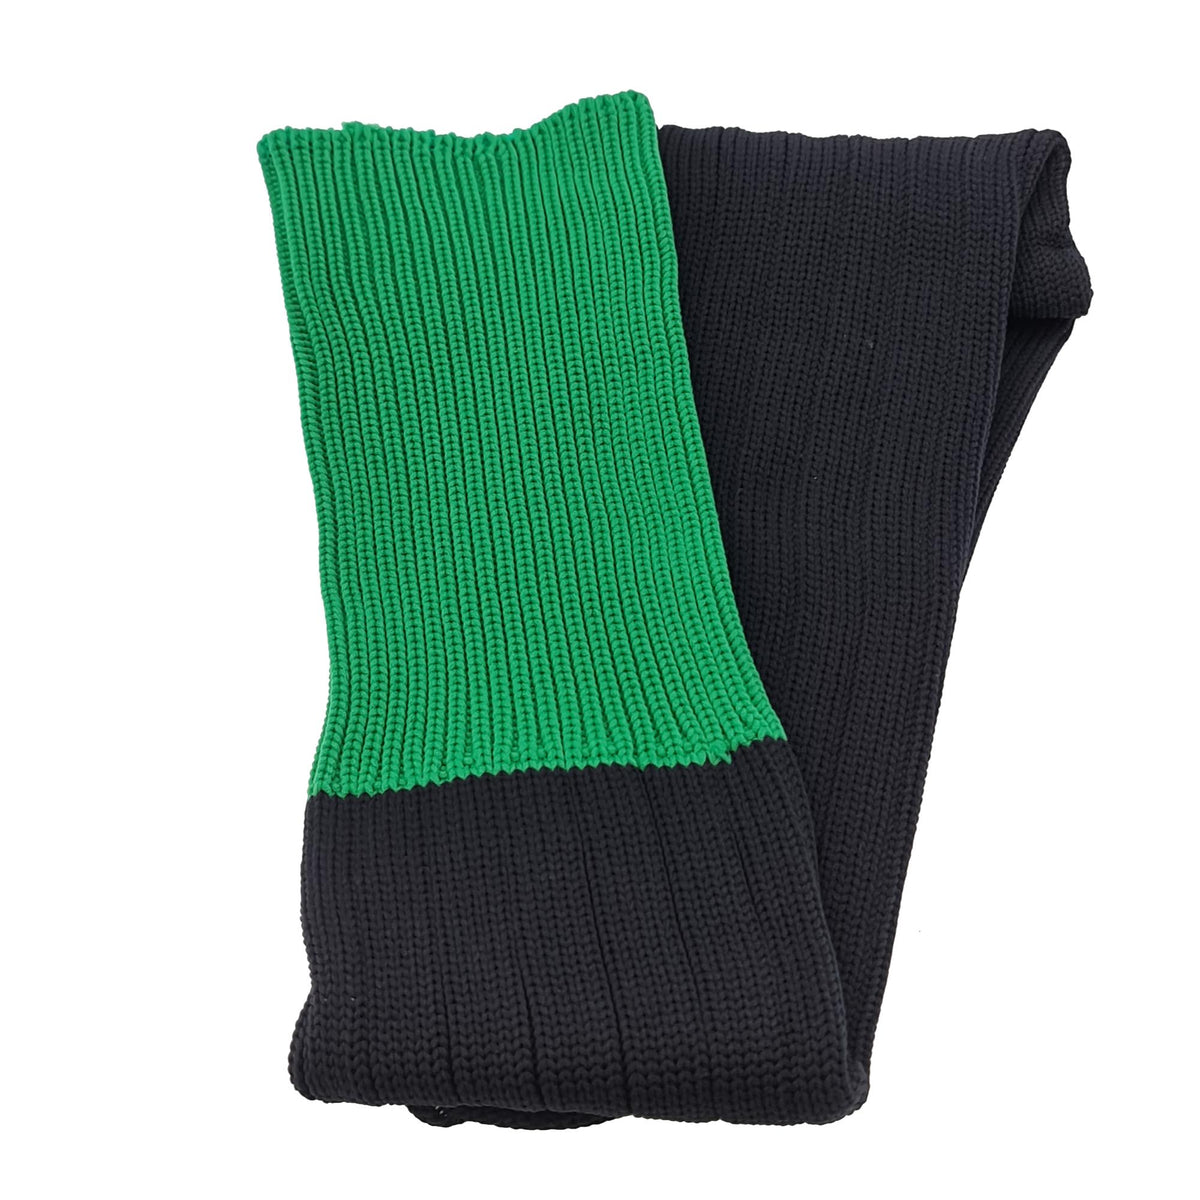 Contrast Top Football Rugby Premium Socks - Made In UK - BLACK/BOTTLE GREEN - MENS ( UK 6-8)